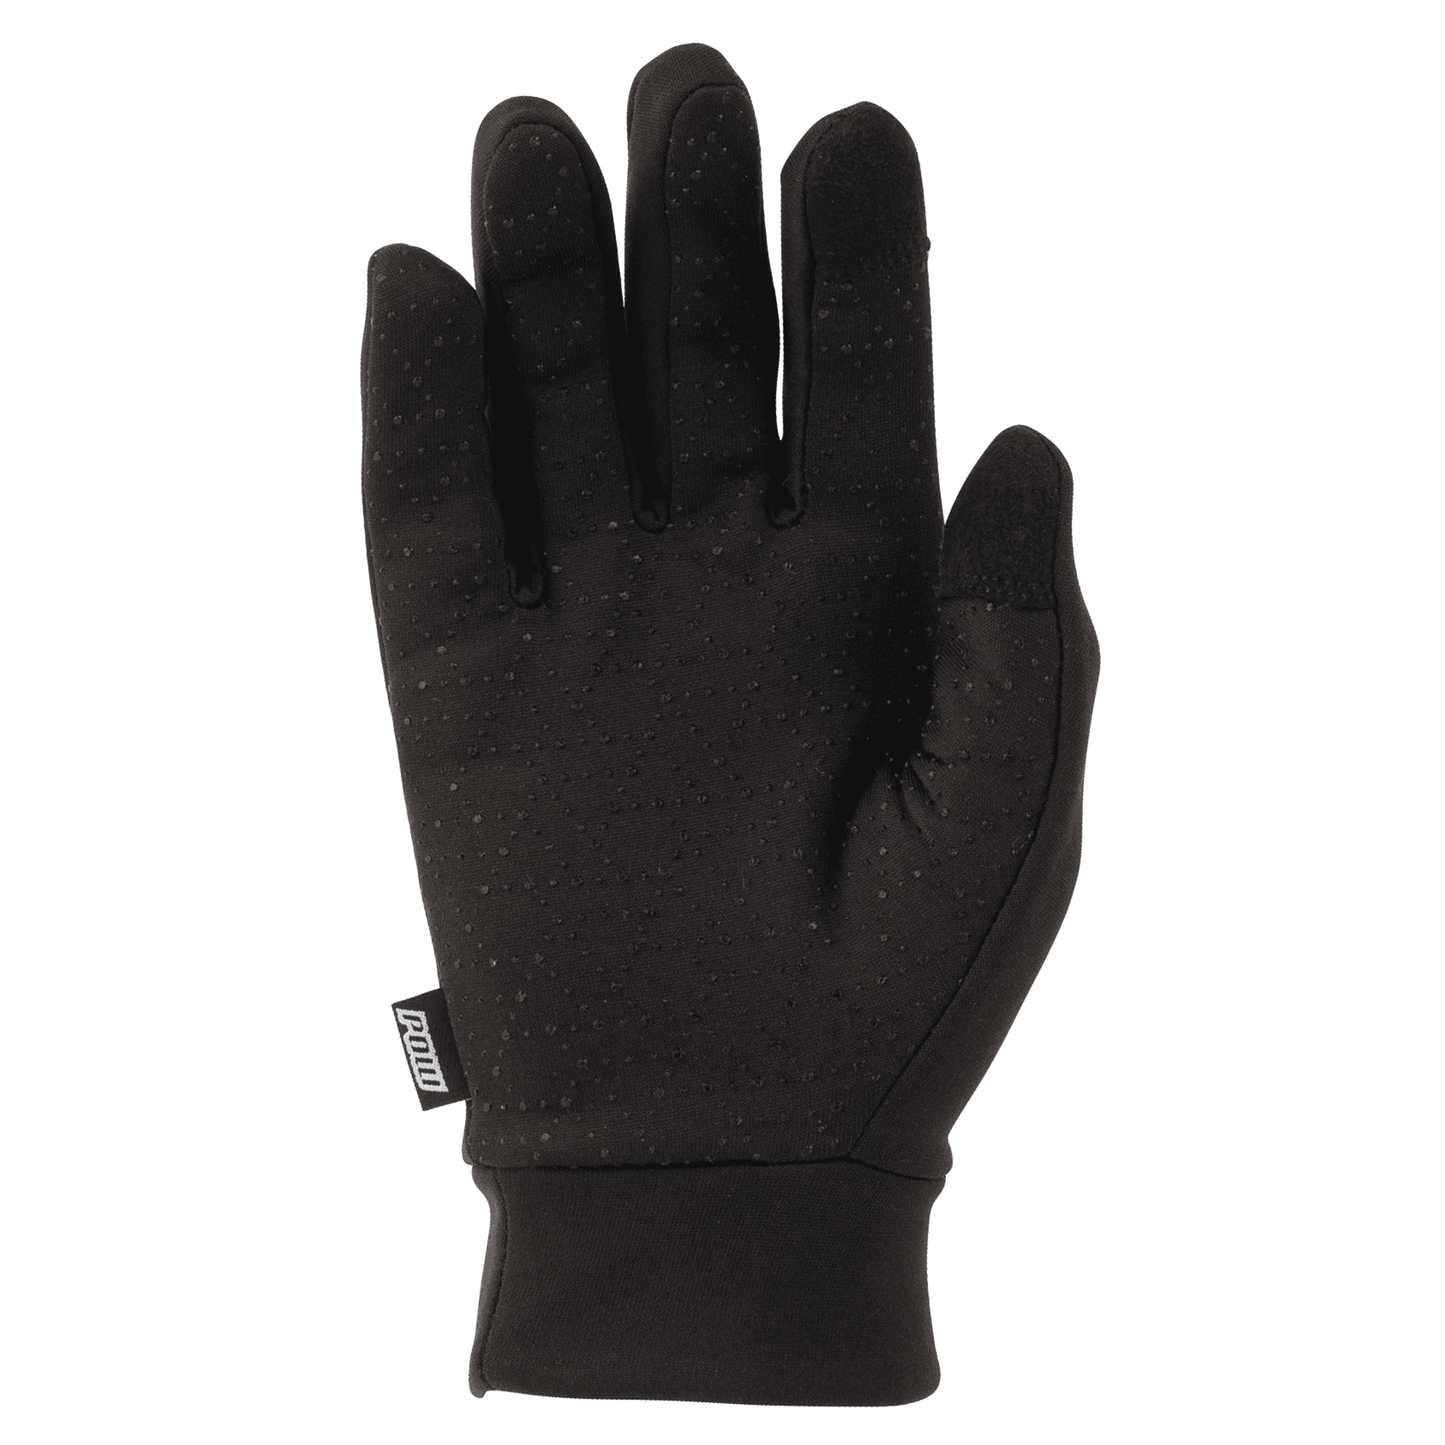 POW Gloves - Men's Microfleece Ski / Snowboard Glove Liner